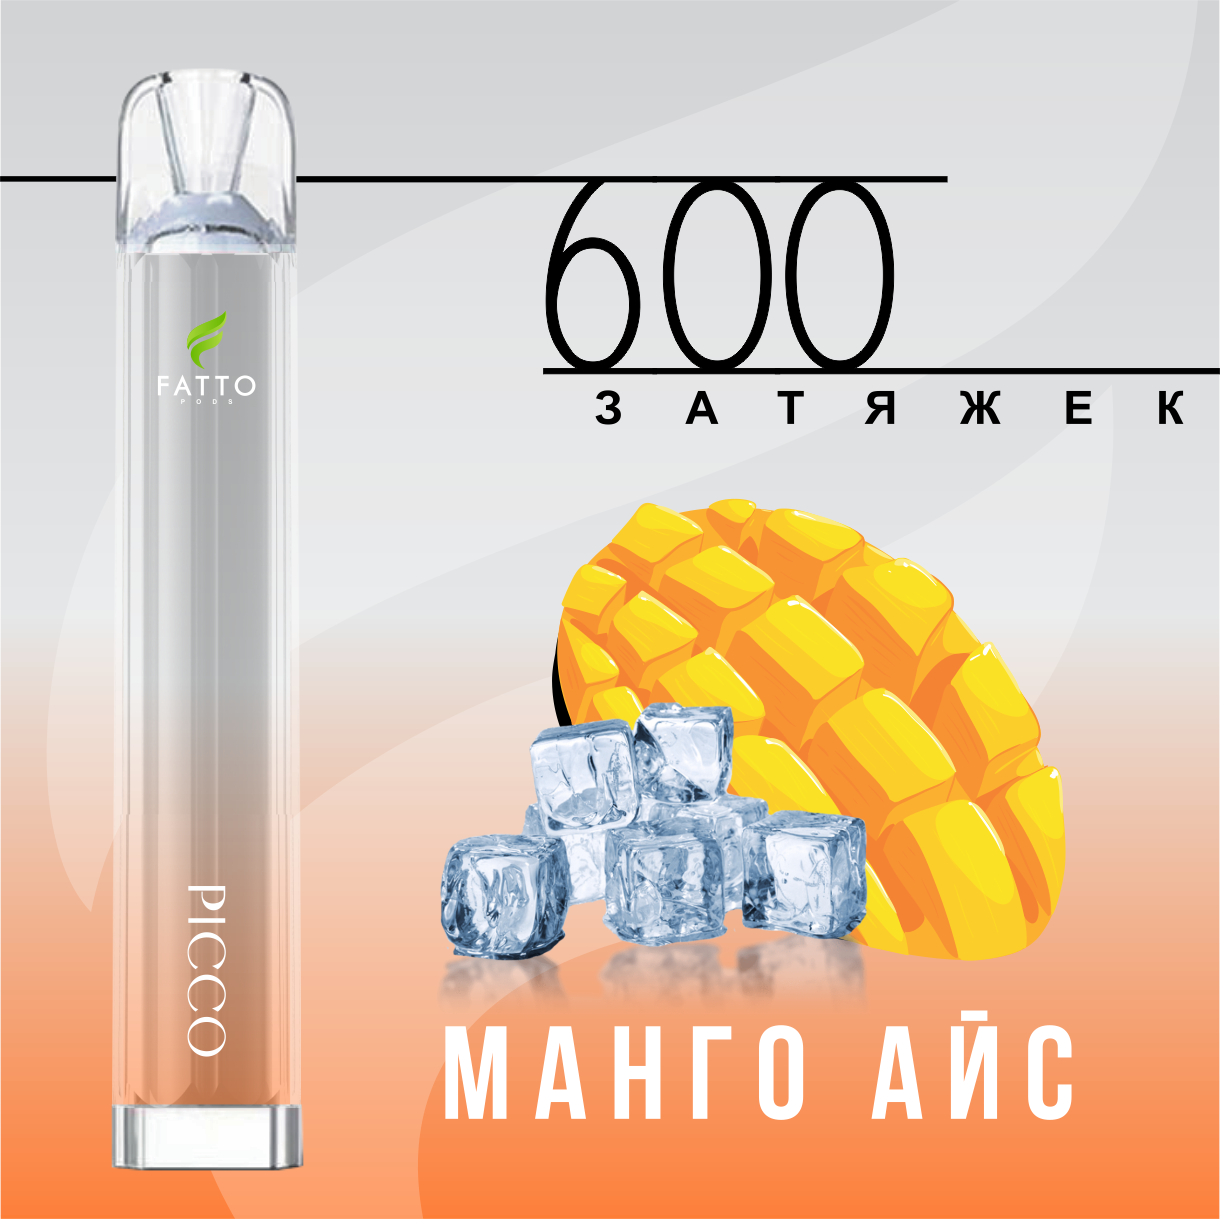 Айс 600. Fatto электронная сигарета. Fatto Picco ( 600 затяжек/ никотин 2%).. Fatto pods жидкость. Fatto 600.